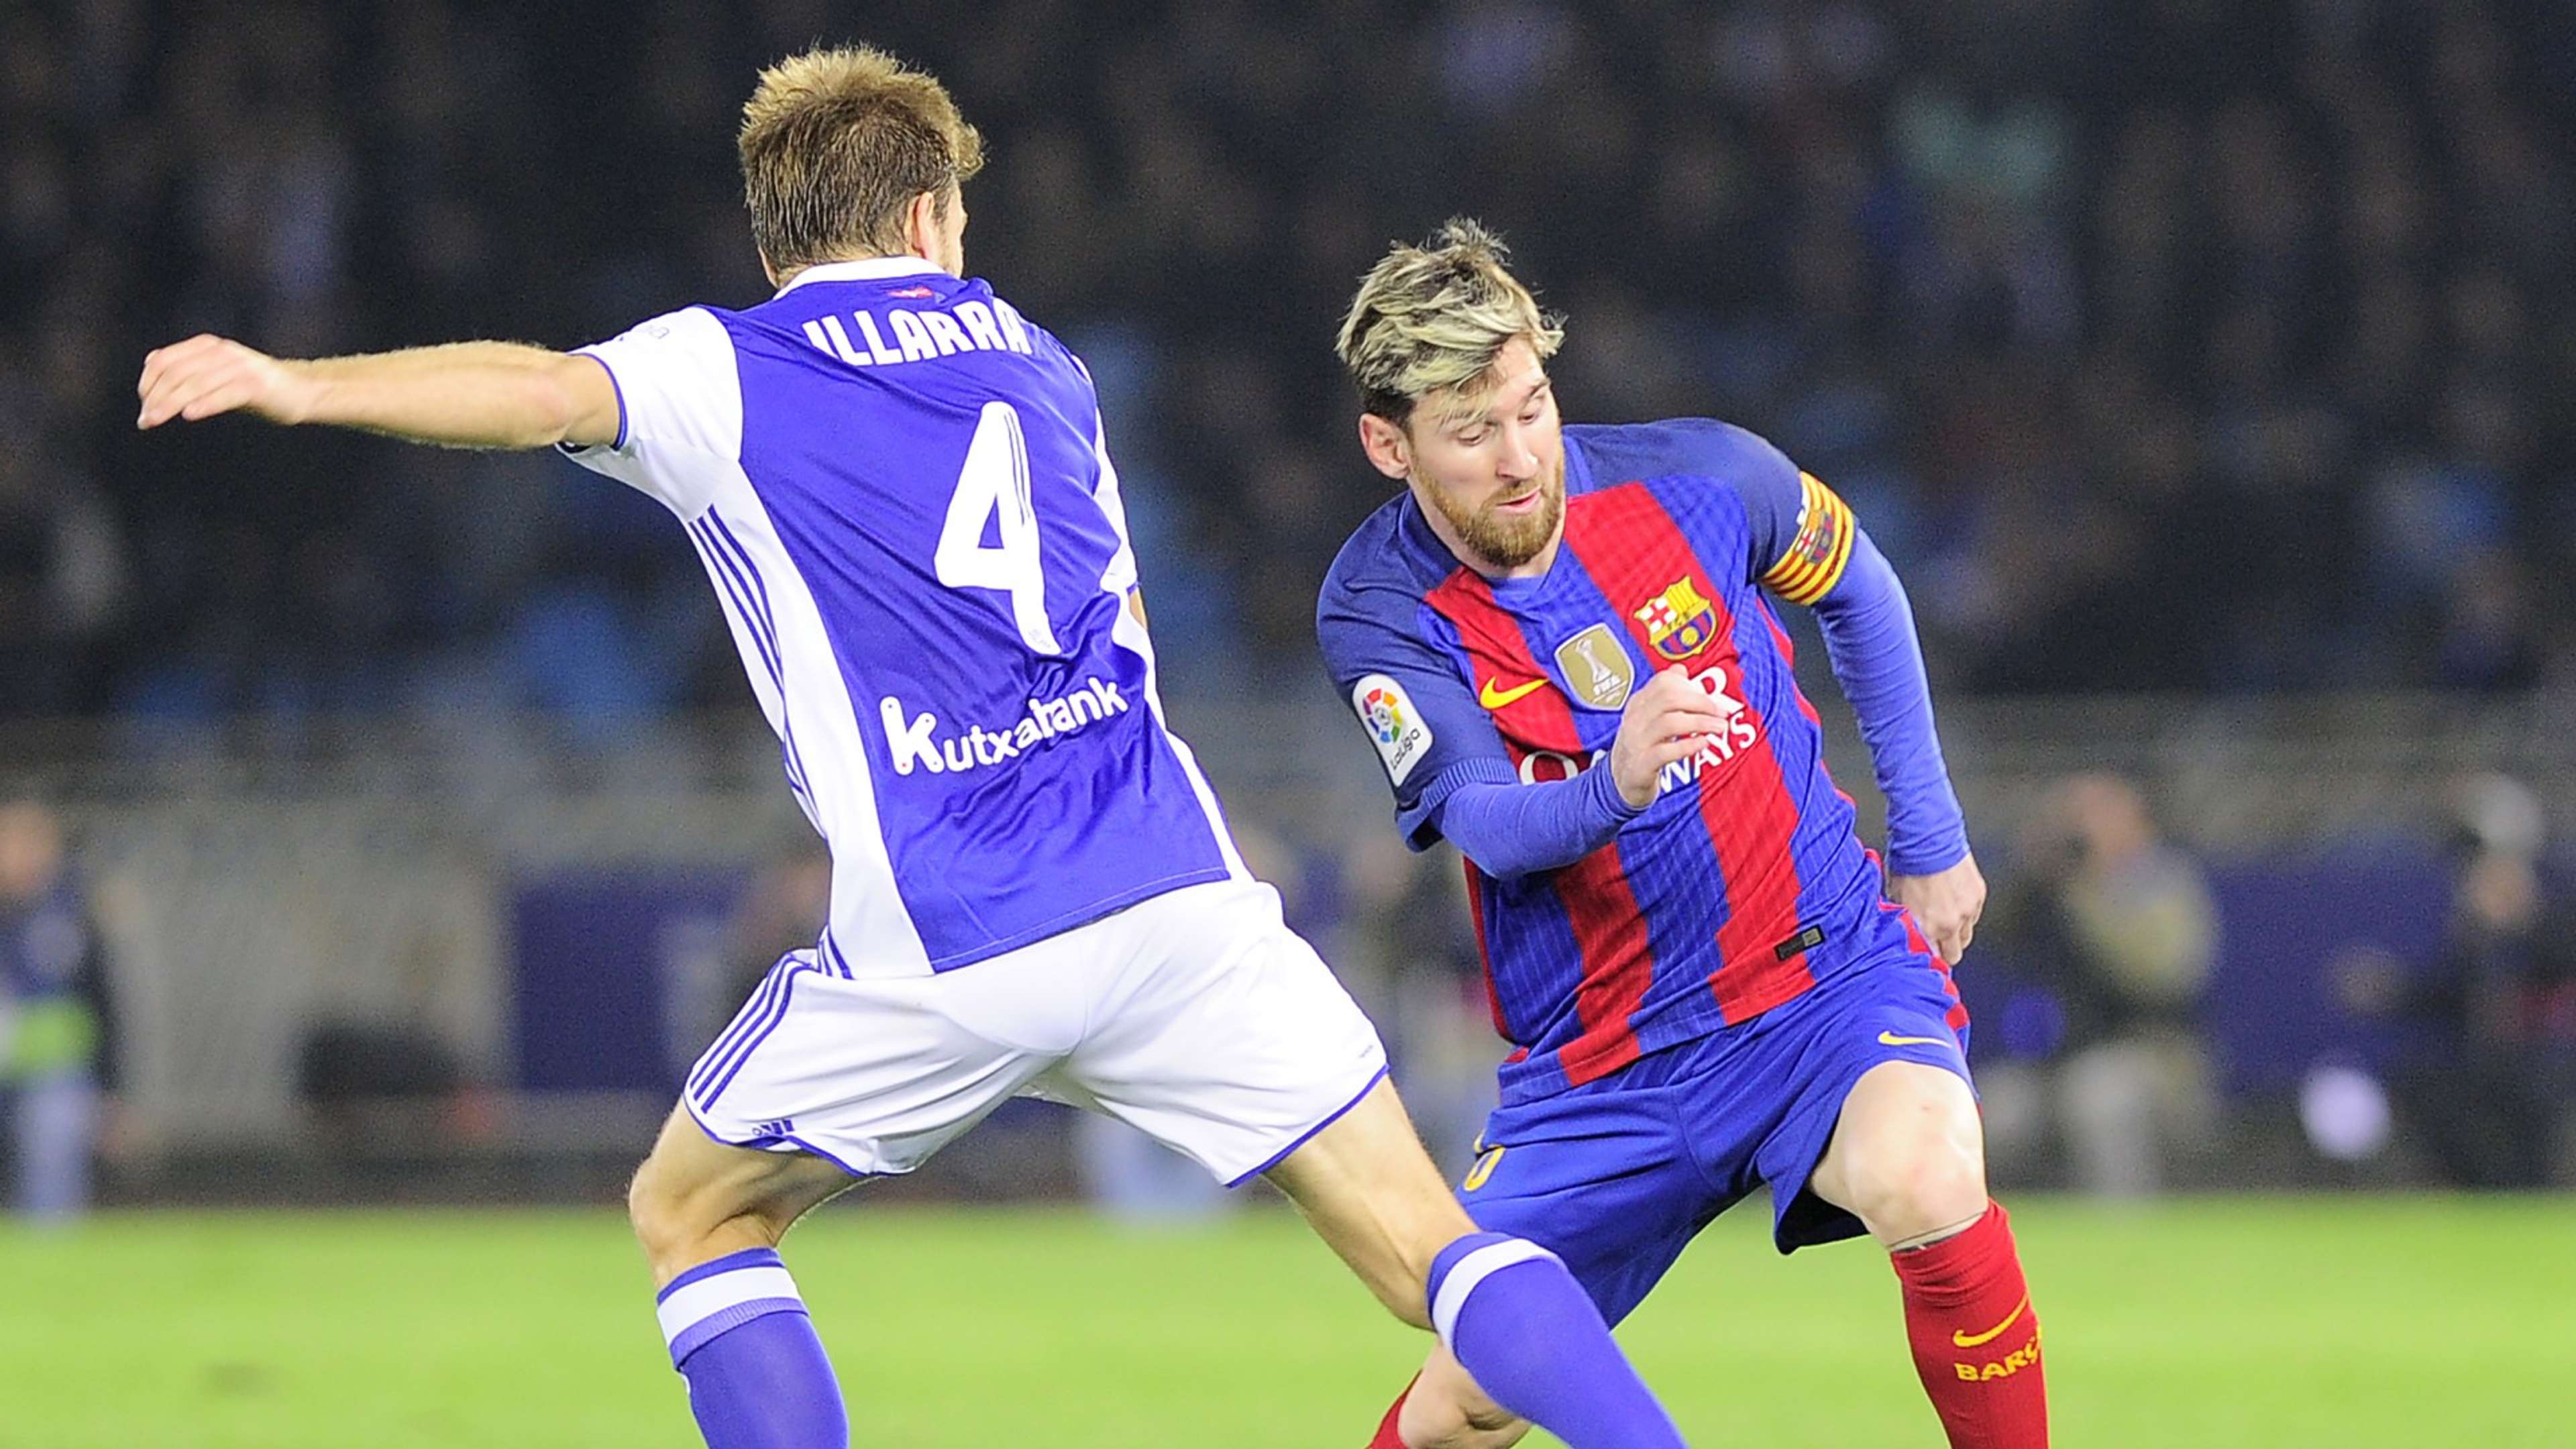 llarramendi Messi Real Sociedad Barcelona LaLiga